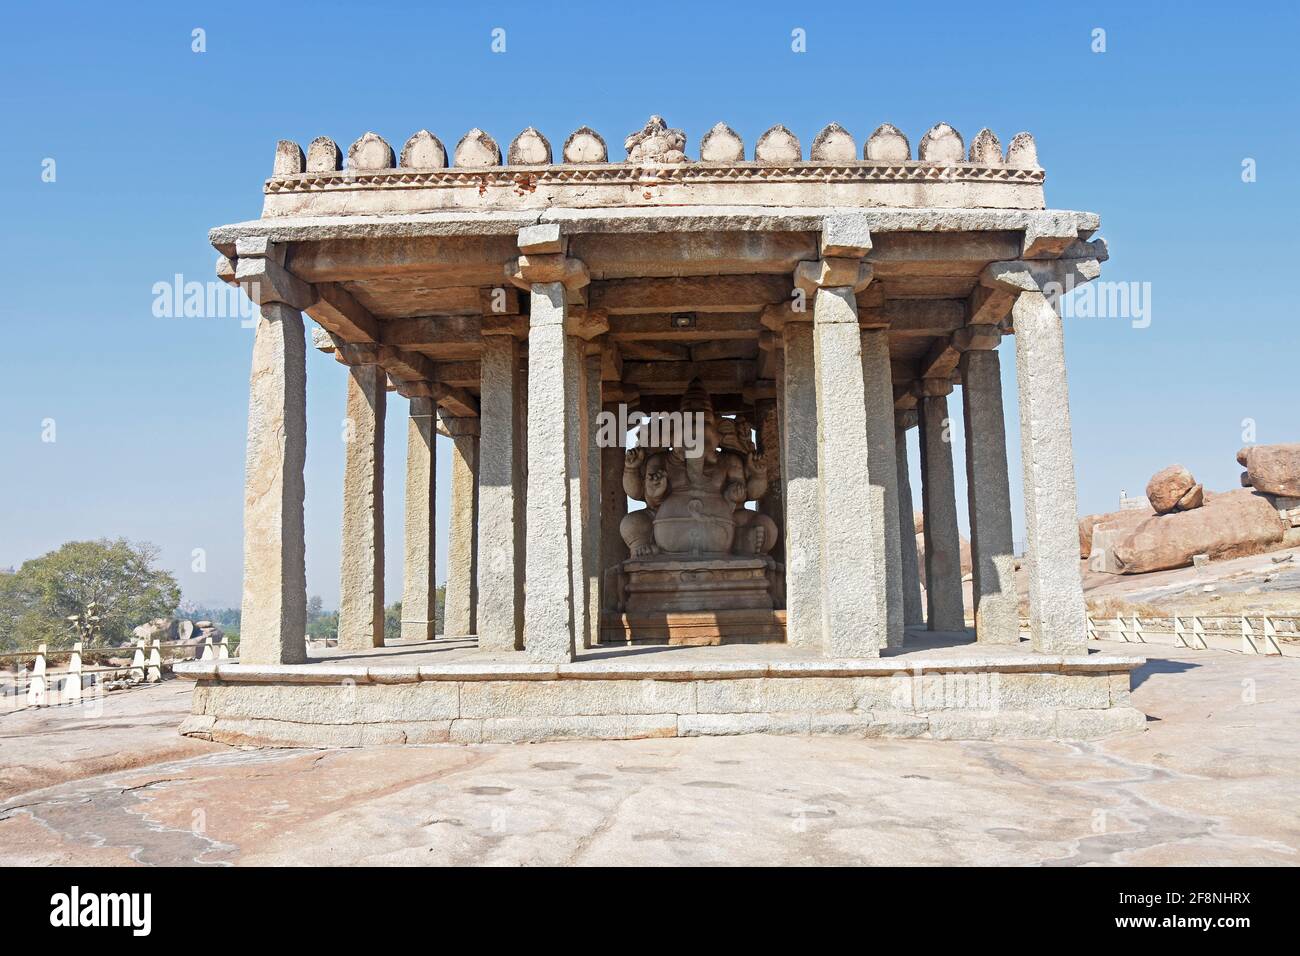 Sasivekalu Ganesha statue, Saasivekaalu Ganesha, empire de Vijayanagara à Hampi est un site classé au patrimoine mondial de l'UNESCO, Hampi, Karnataka, Inde, Asie, Indien, asiatique Banque D'Images